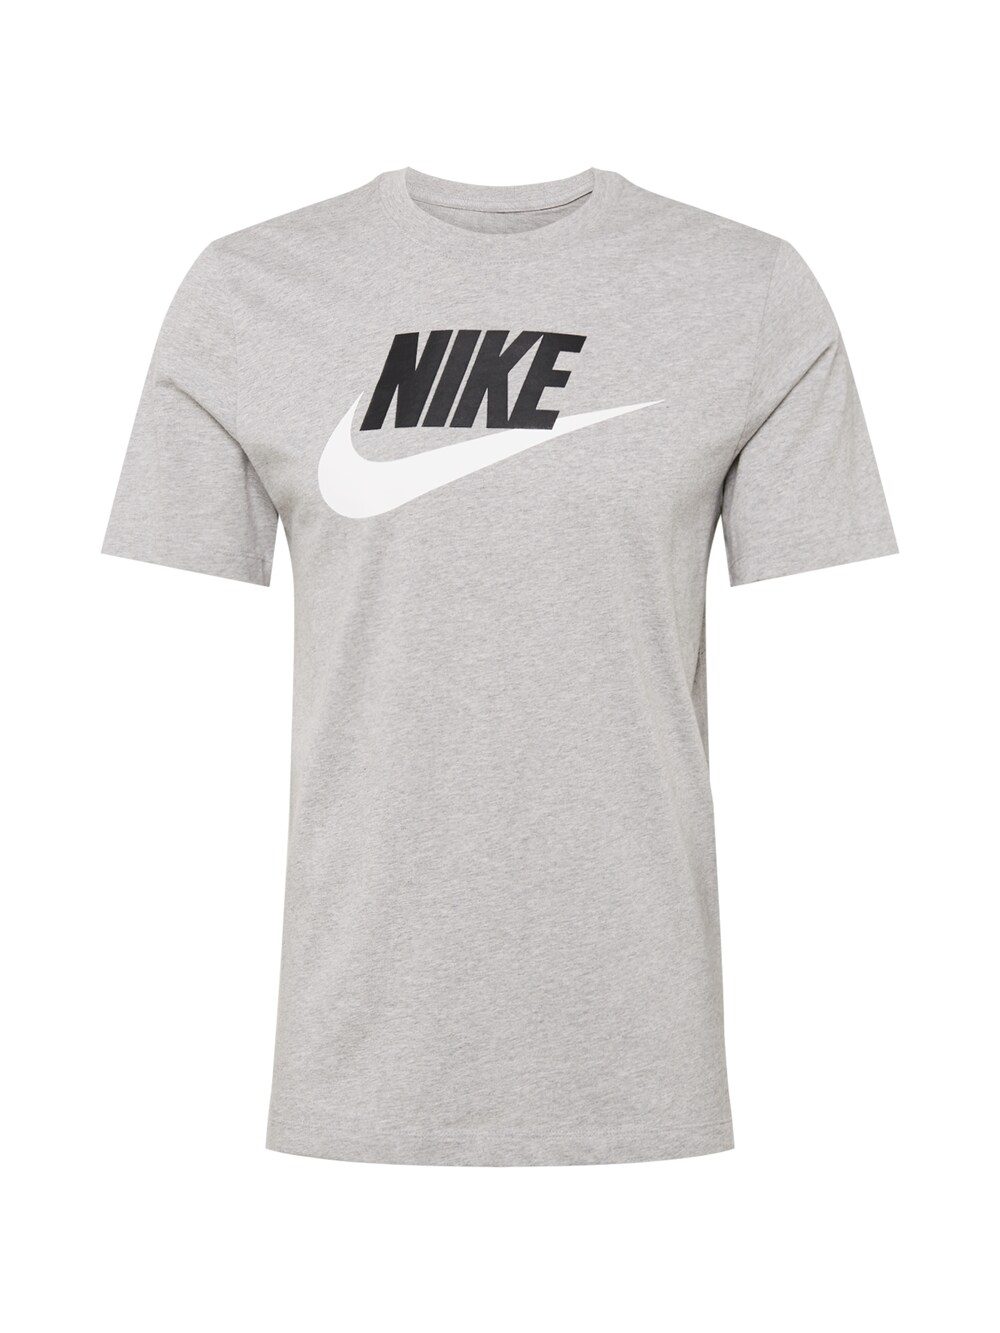 Футболка стандартного кроя Nike Sportswear Icon Futura, пестрый серый